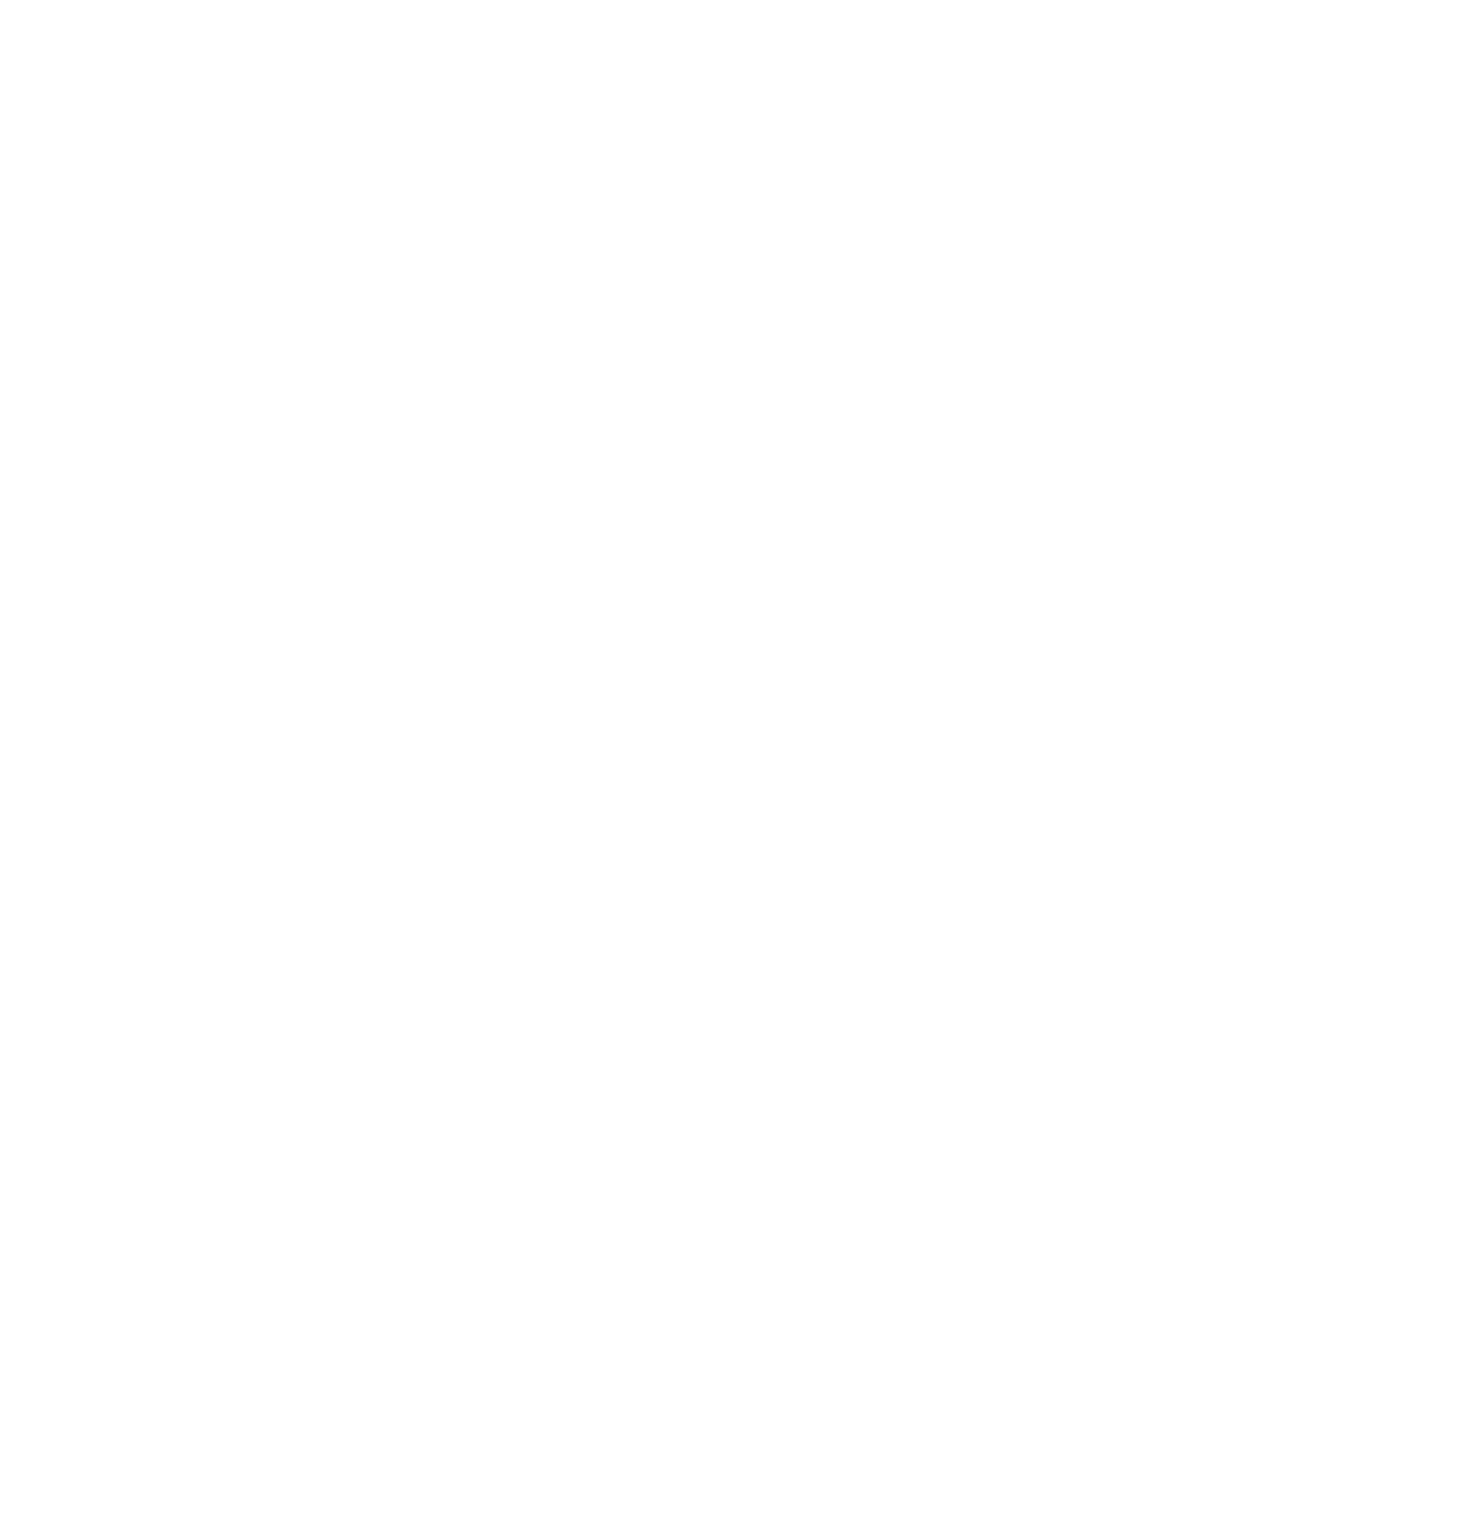 AMN Healthcare Services logo for dark backgrounds (transparent PNG)